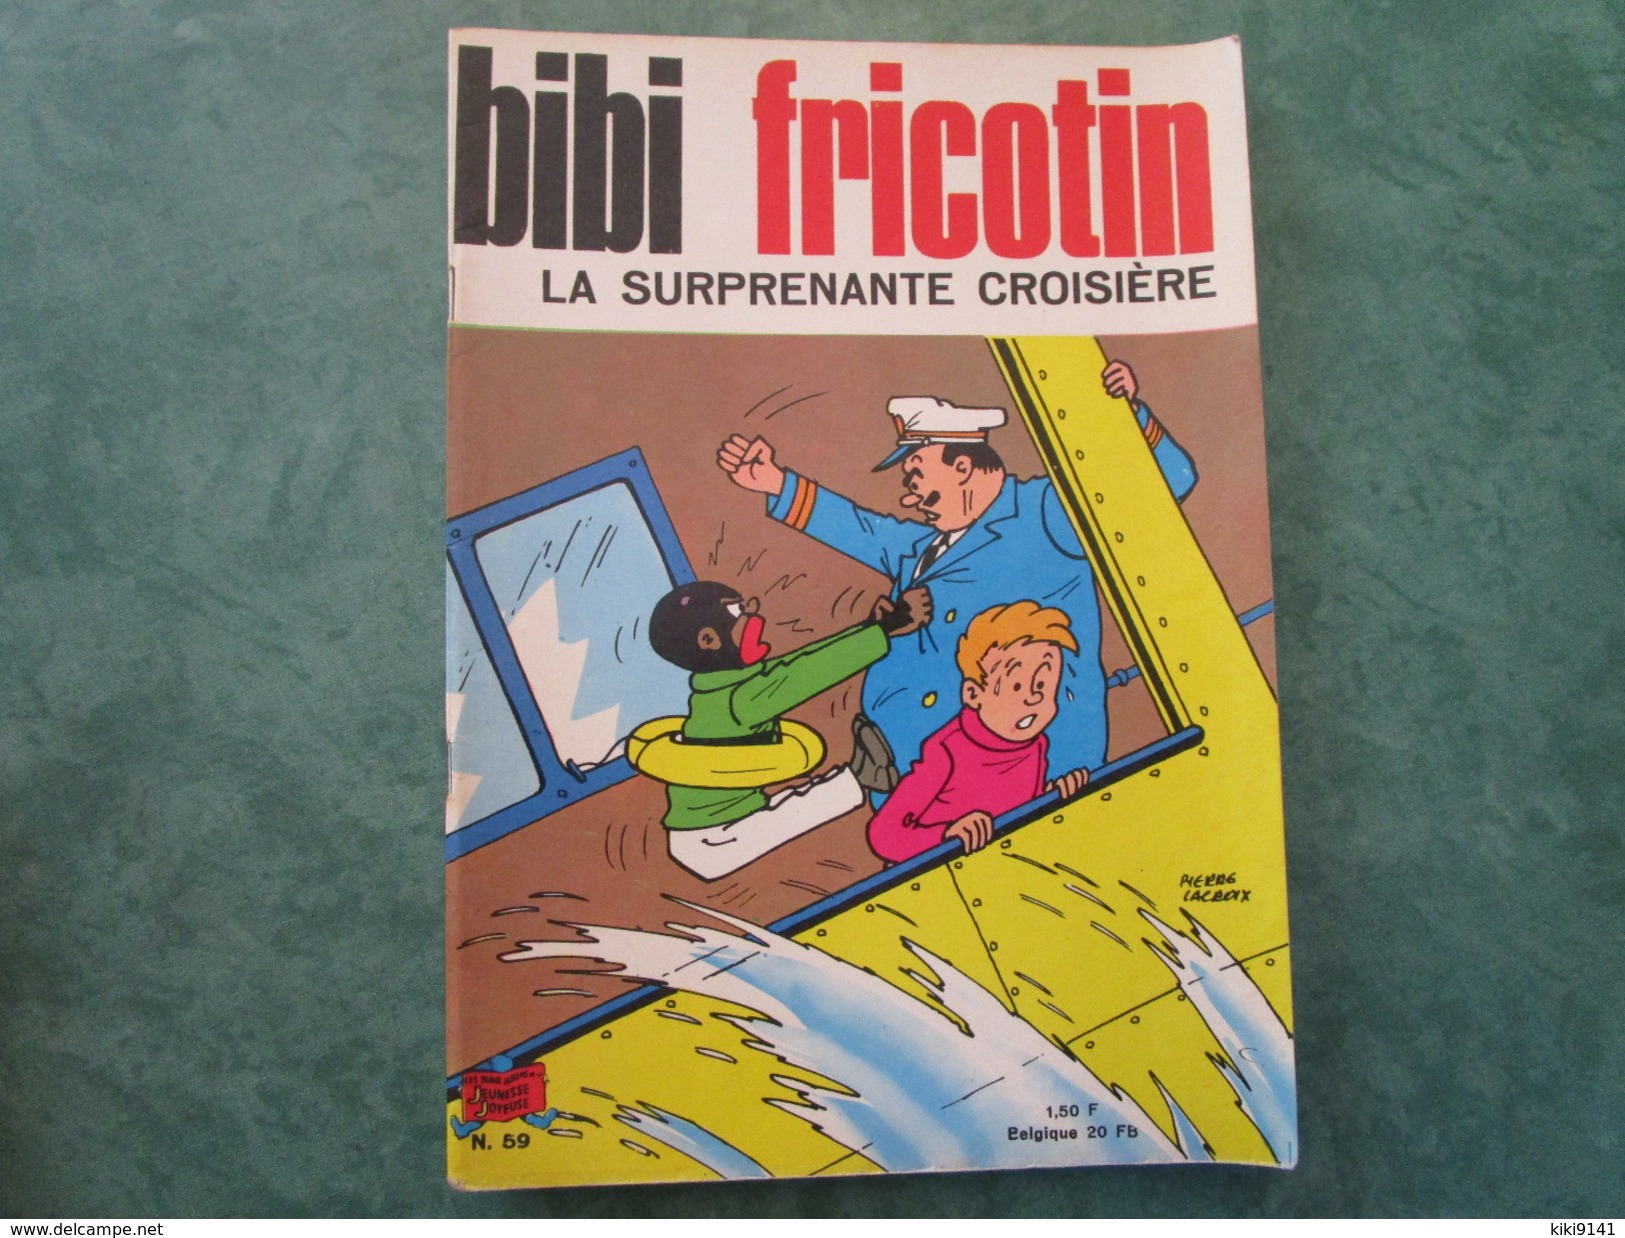 LA SURPRENANTE CROISIERE - N°59 - Edition 1968 - Bibi Fricotin